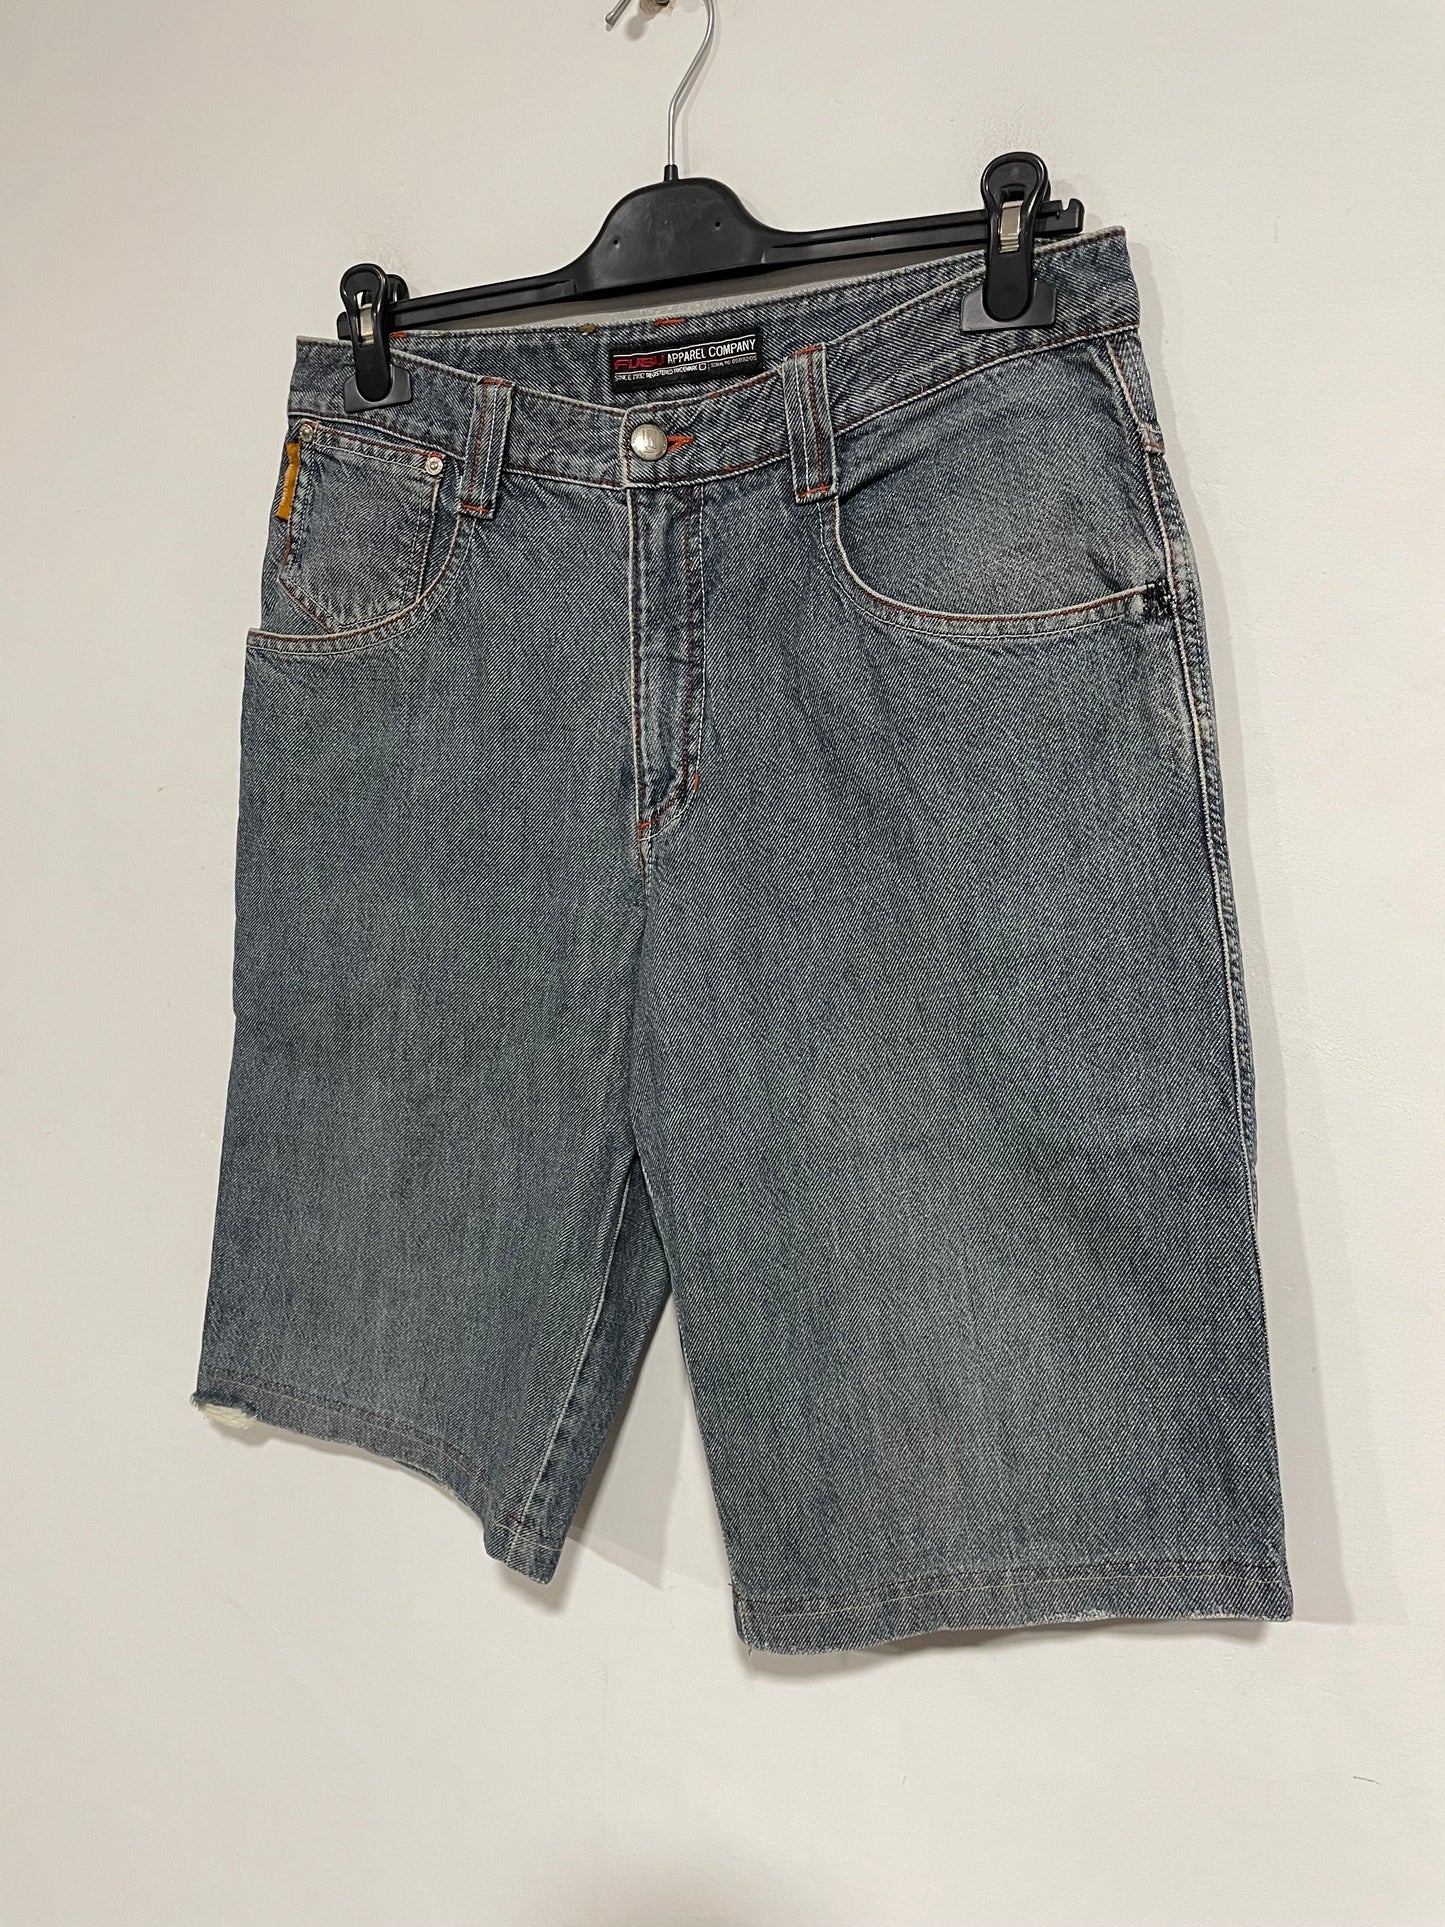 Rarissimo shorts baggy Fubu anni 90 (D504)